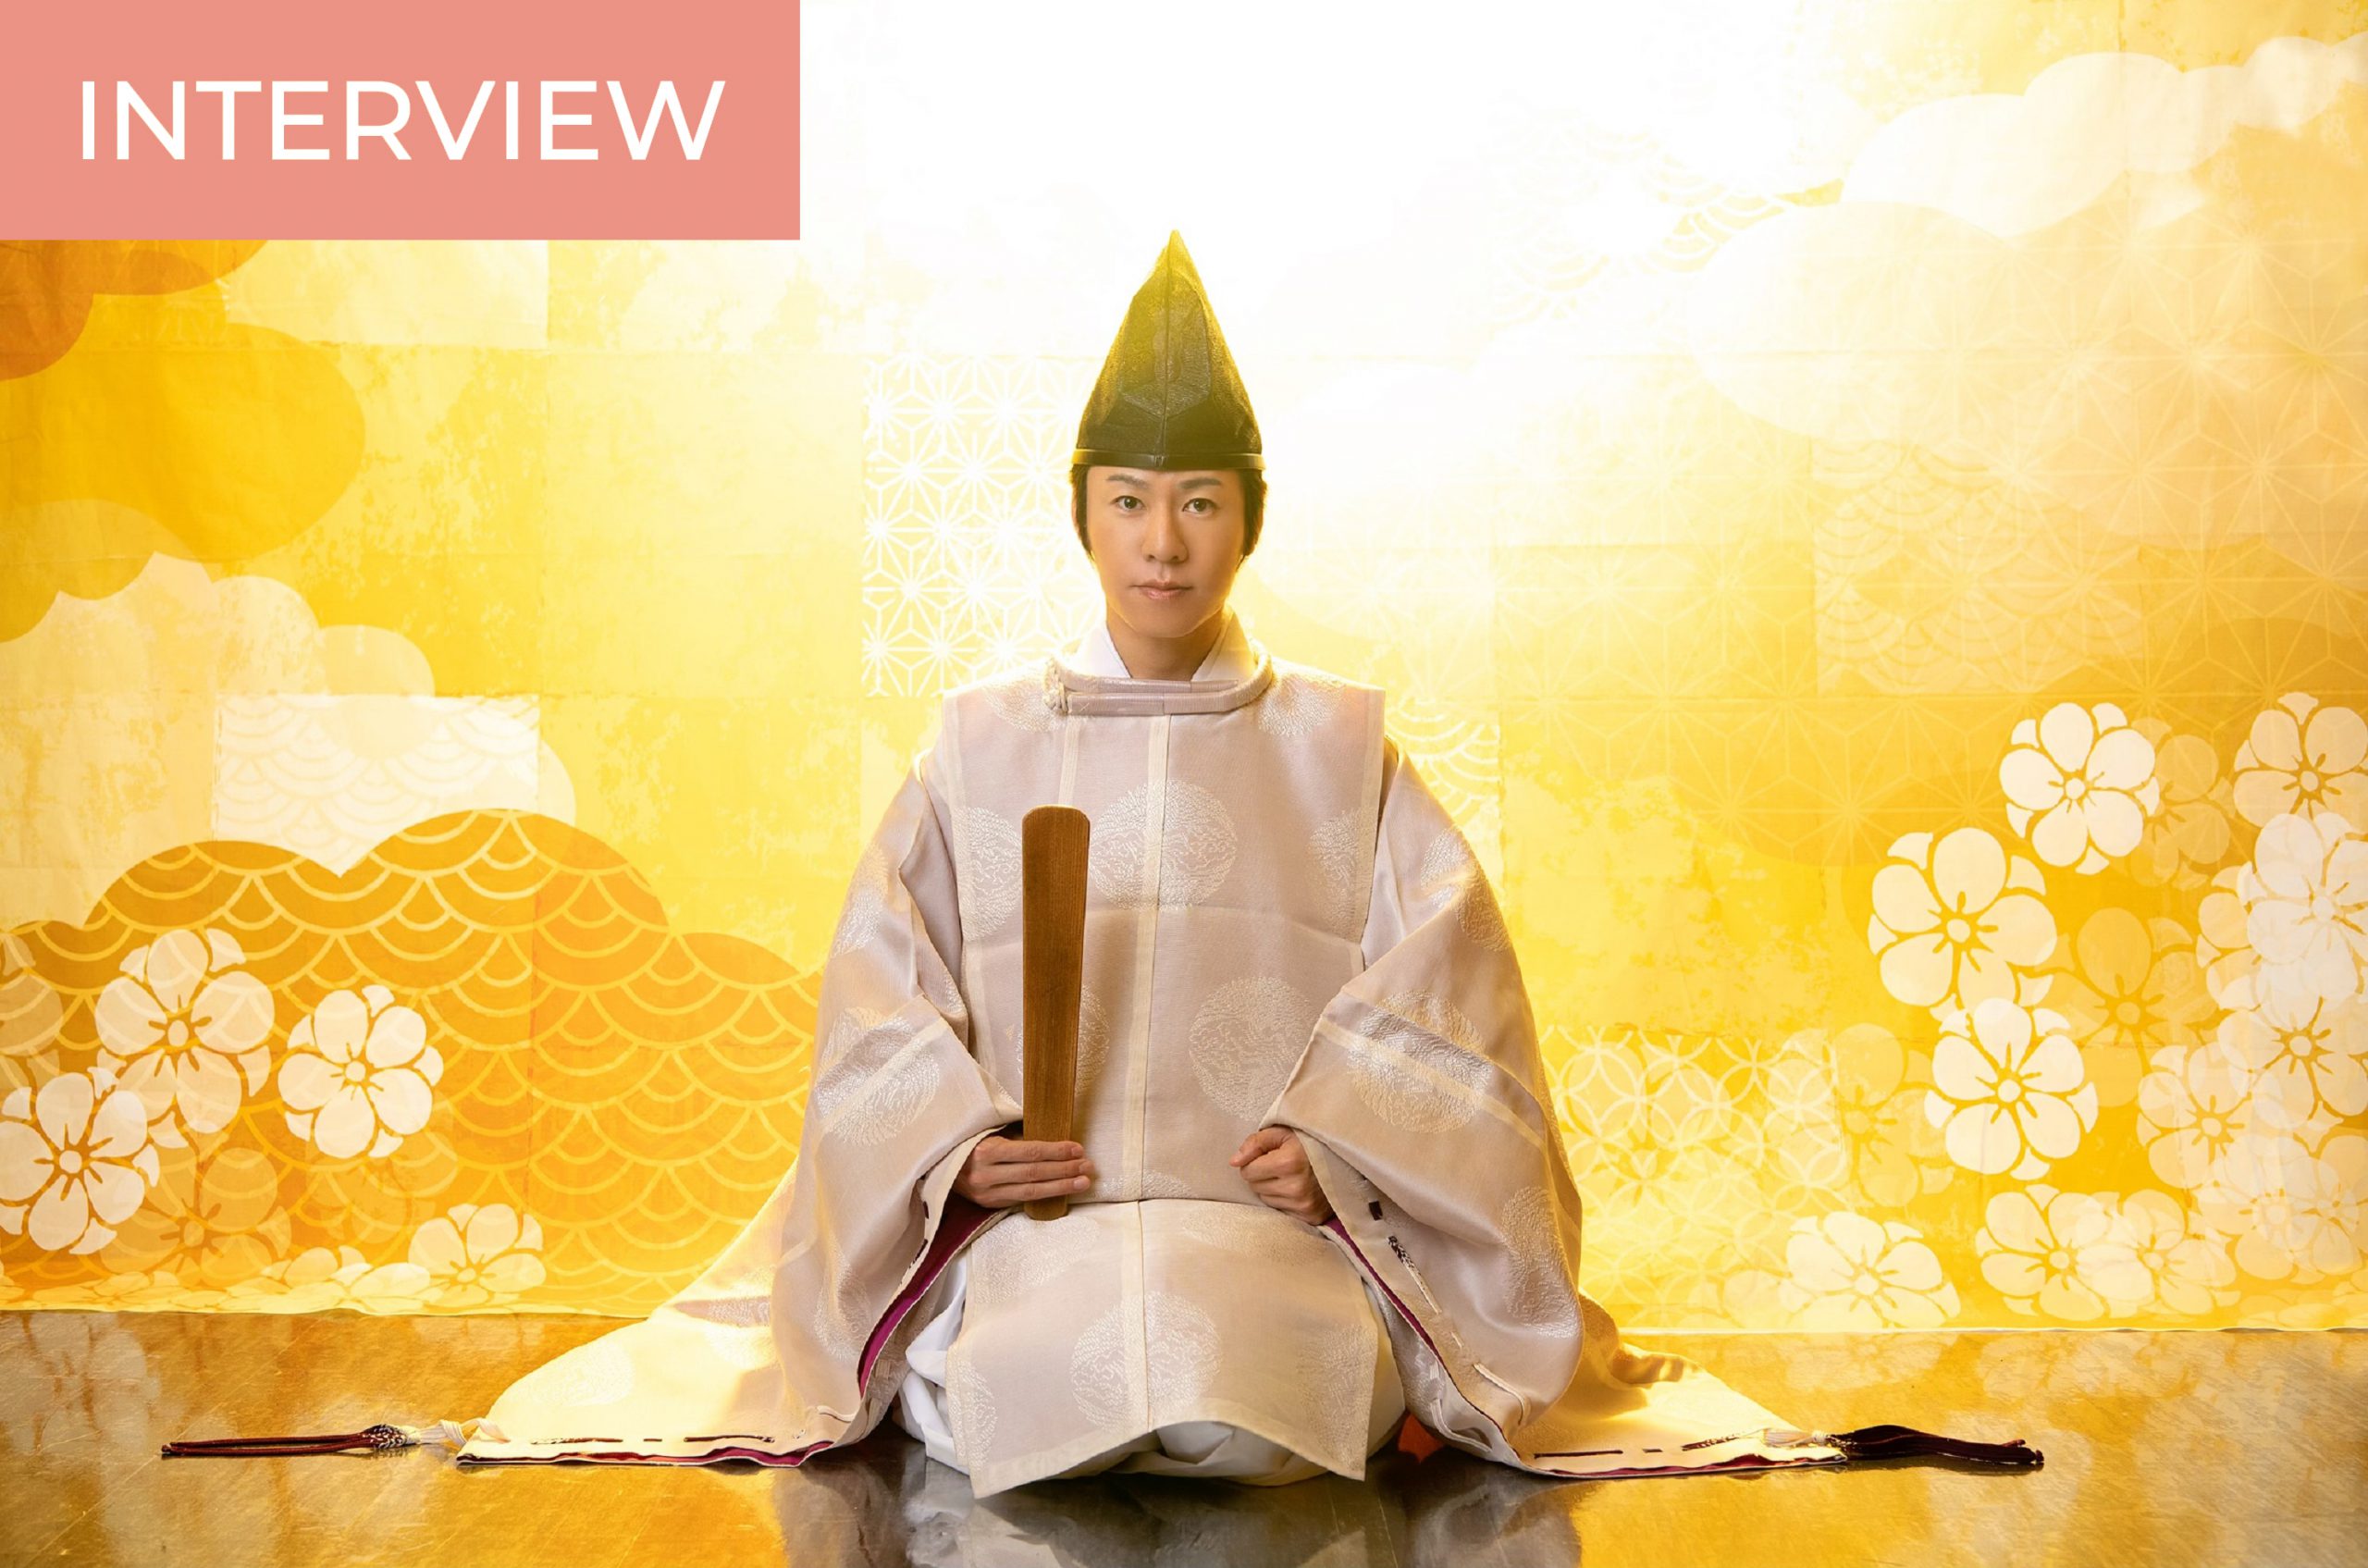 Shinto Religion  Definition, Gods & Practices - Video & Lesson